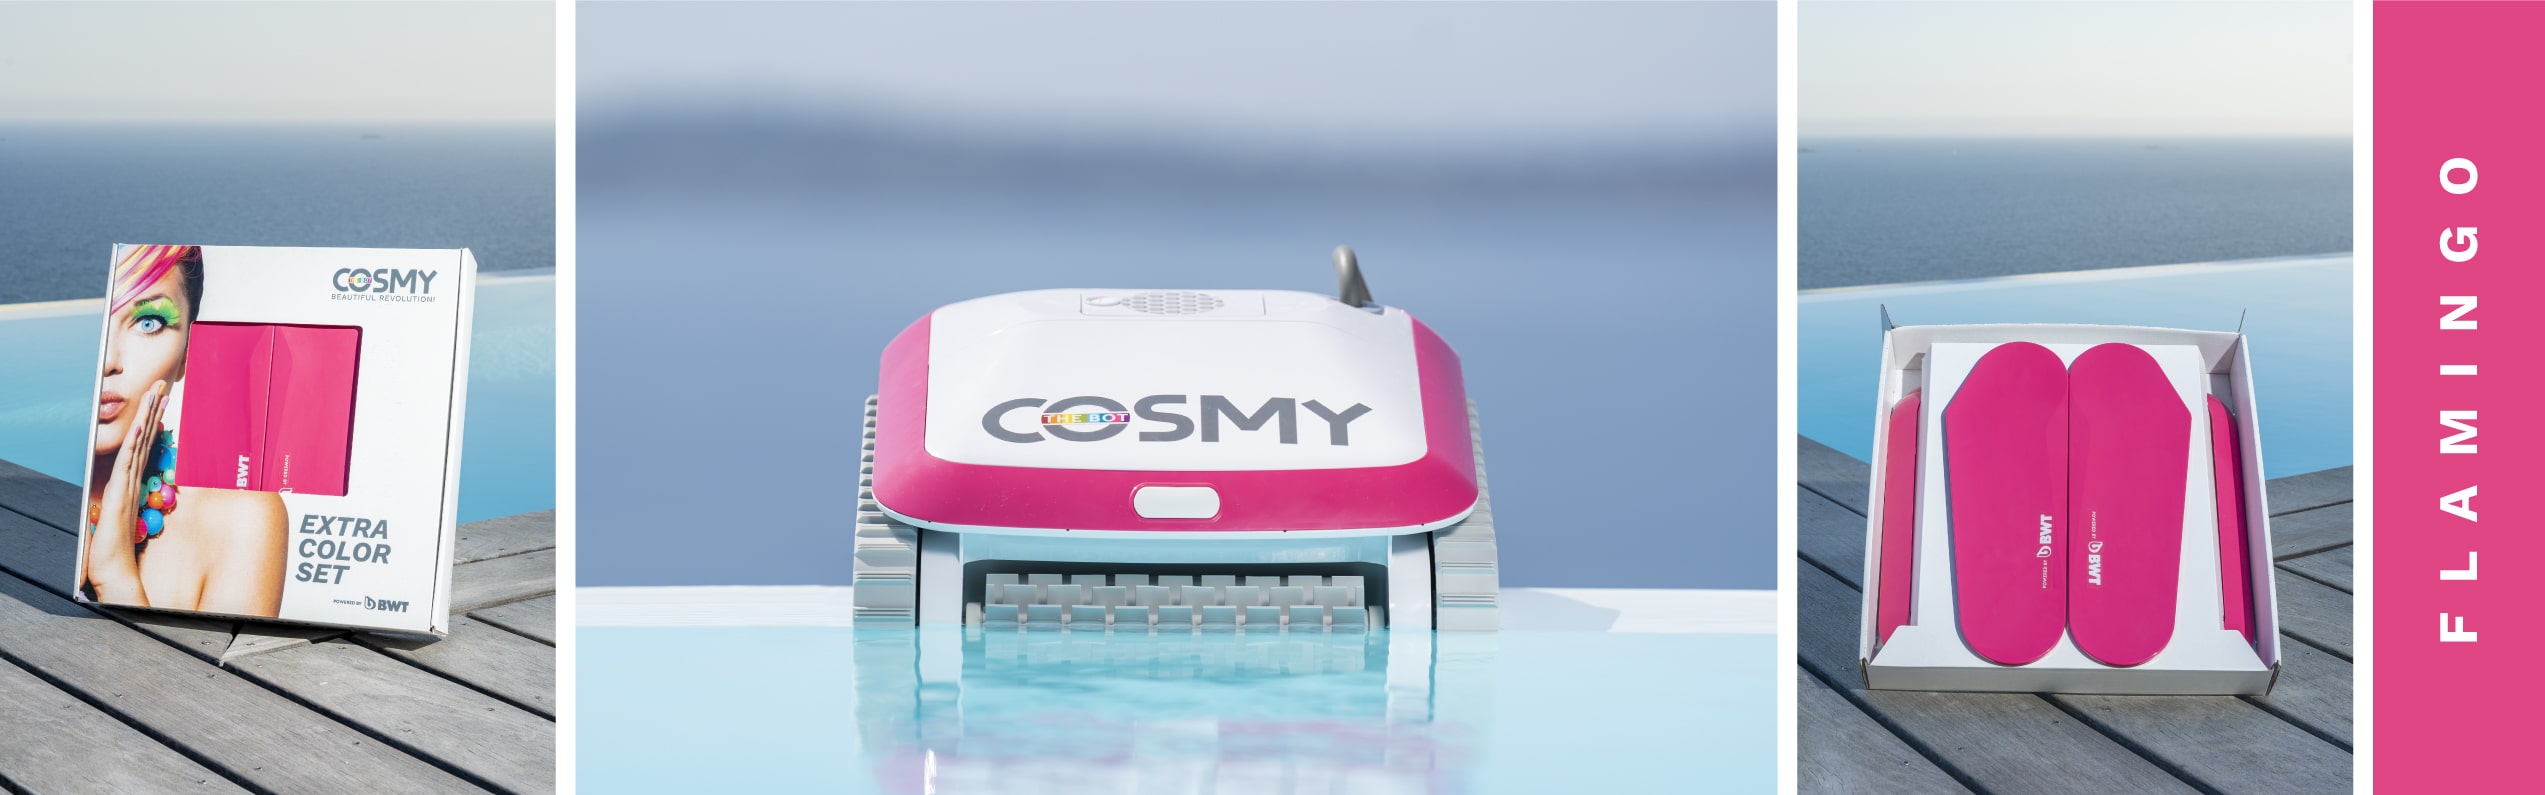 robot cosmy kit couleur flamingo